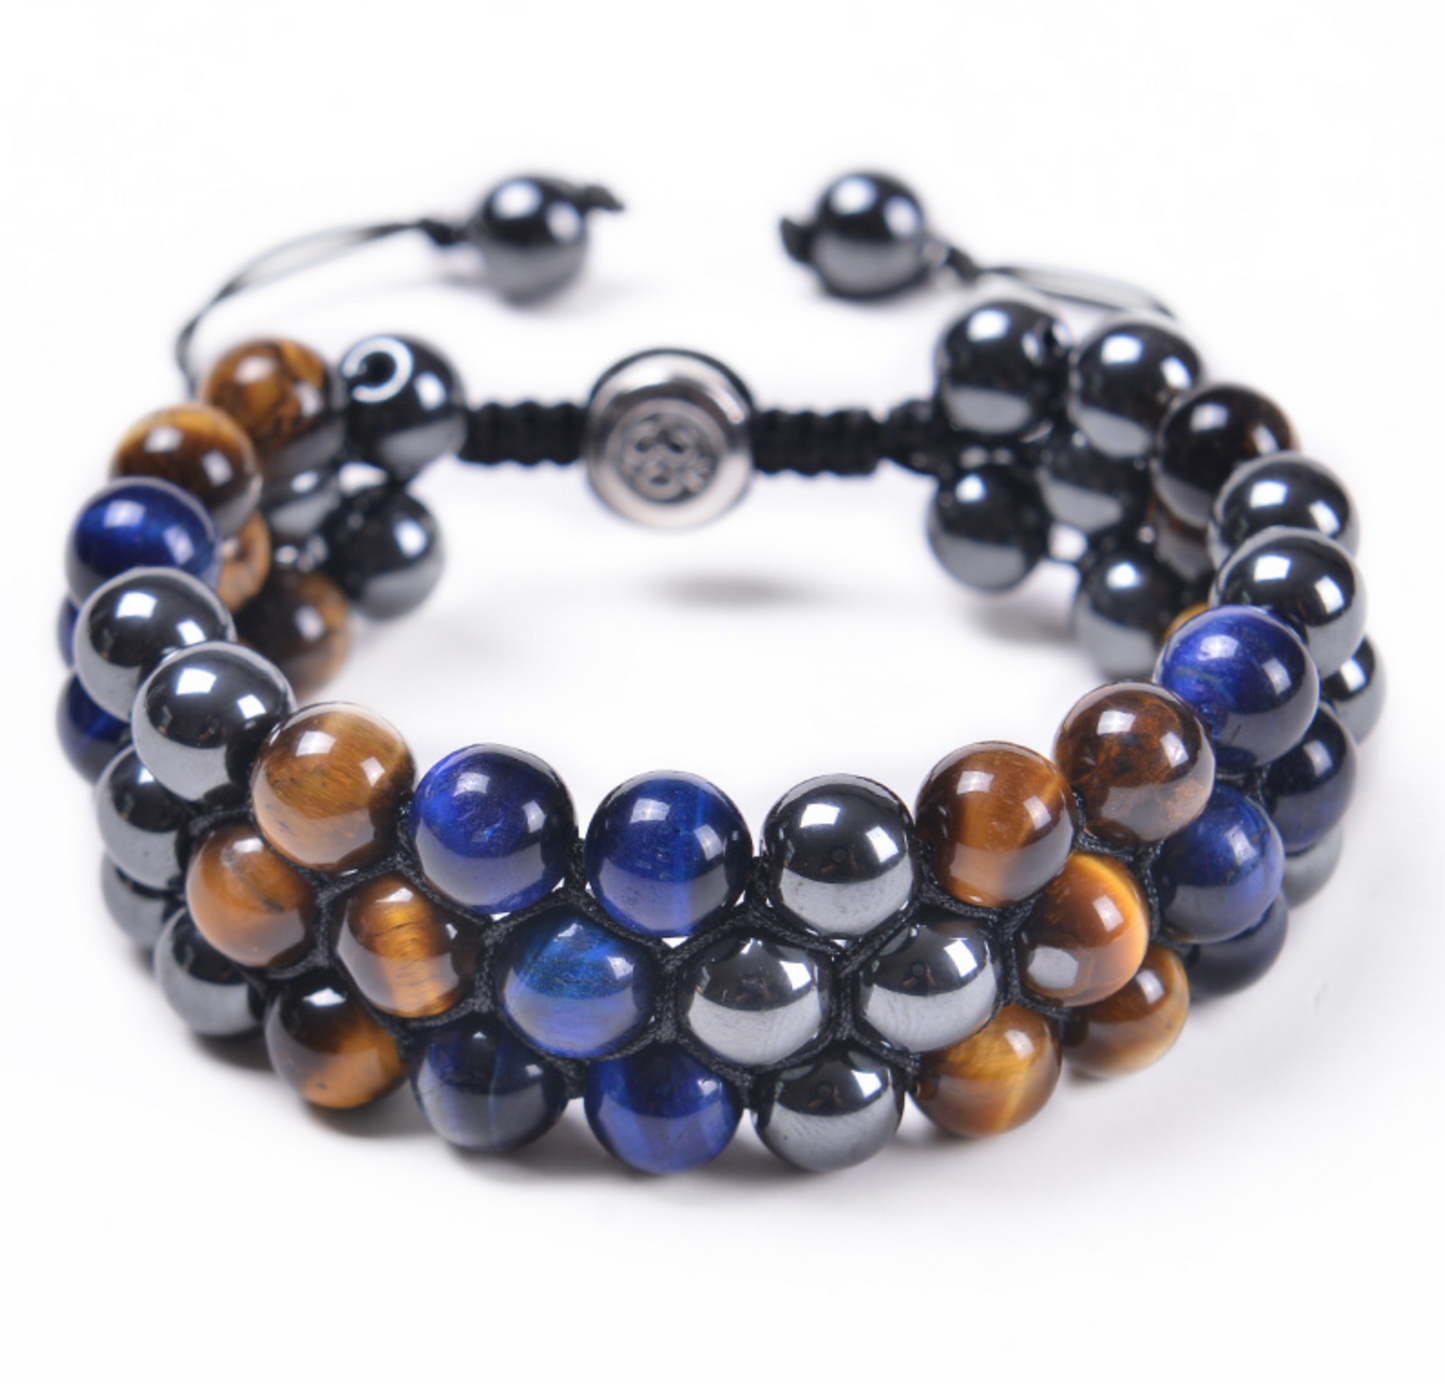 Handmade 8MM Natural Tiger Eye Beads Woven Adjustable Bracelet